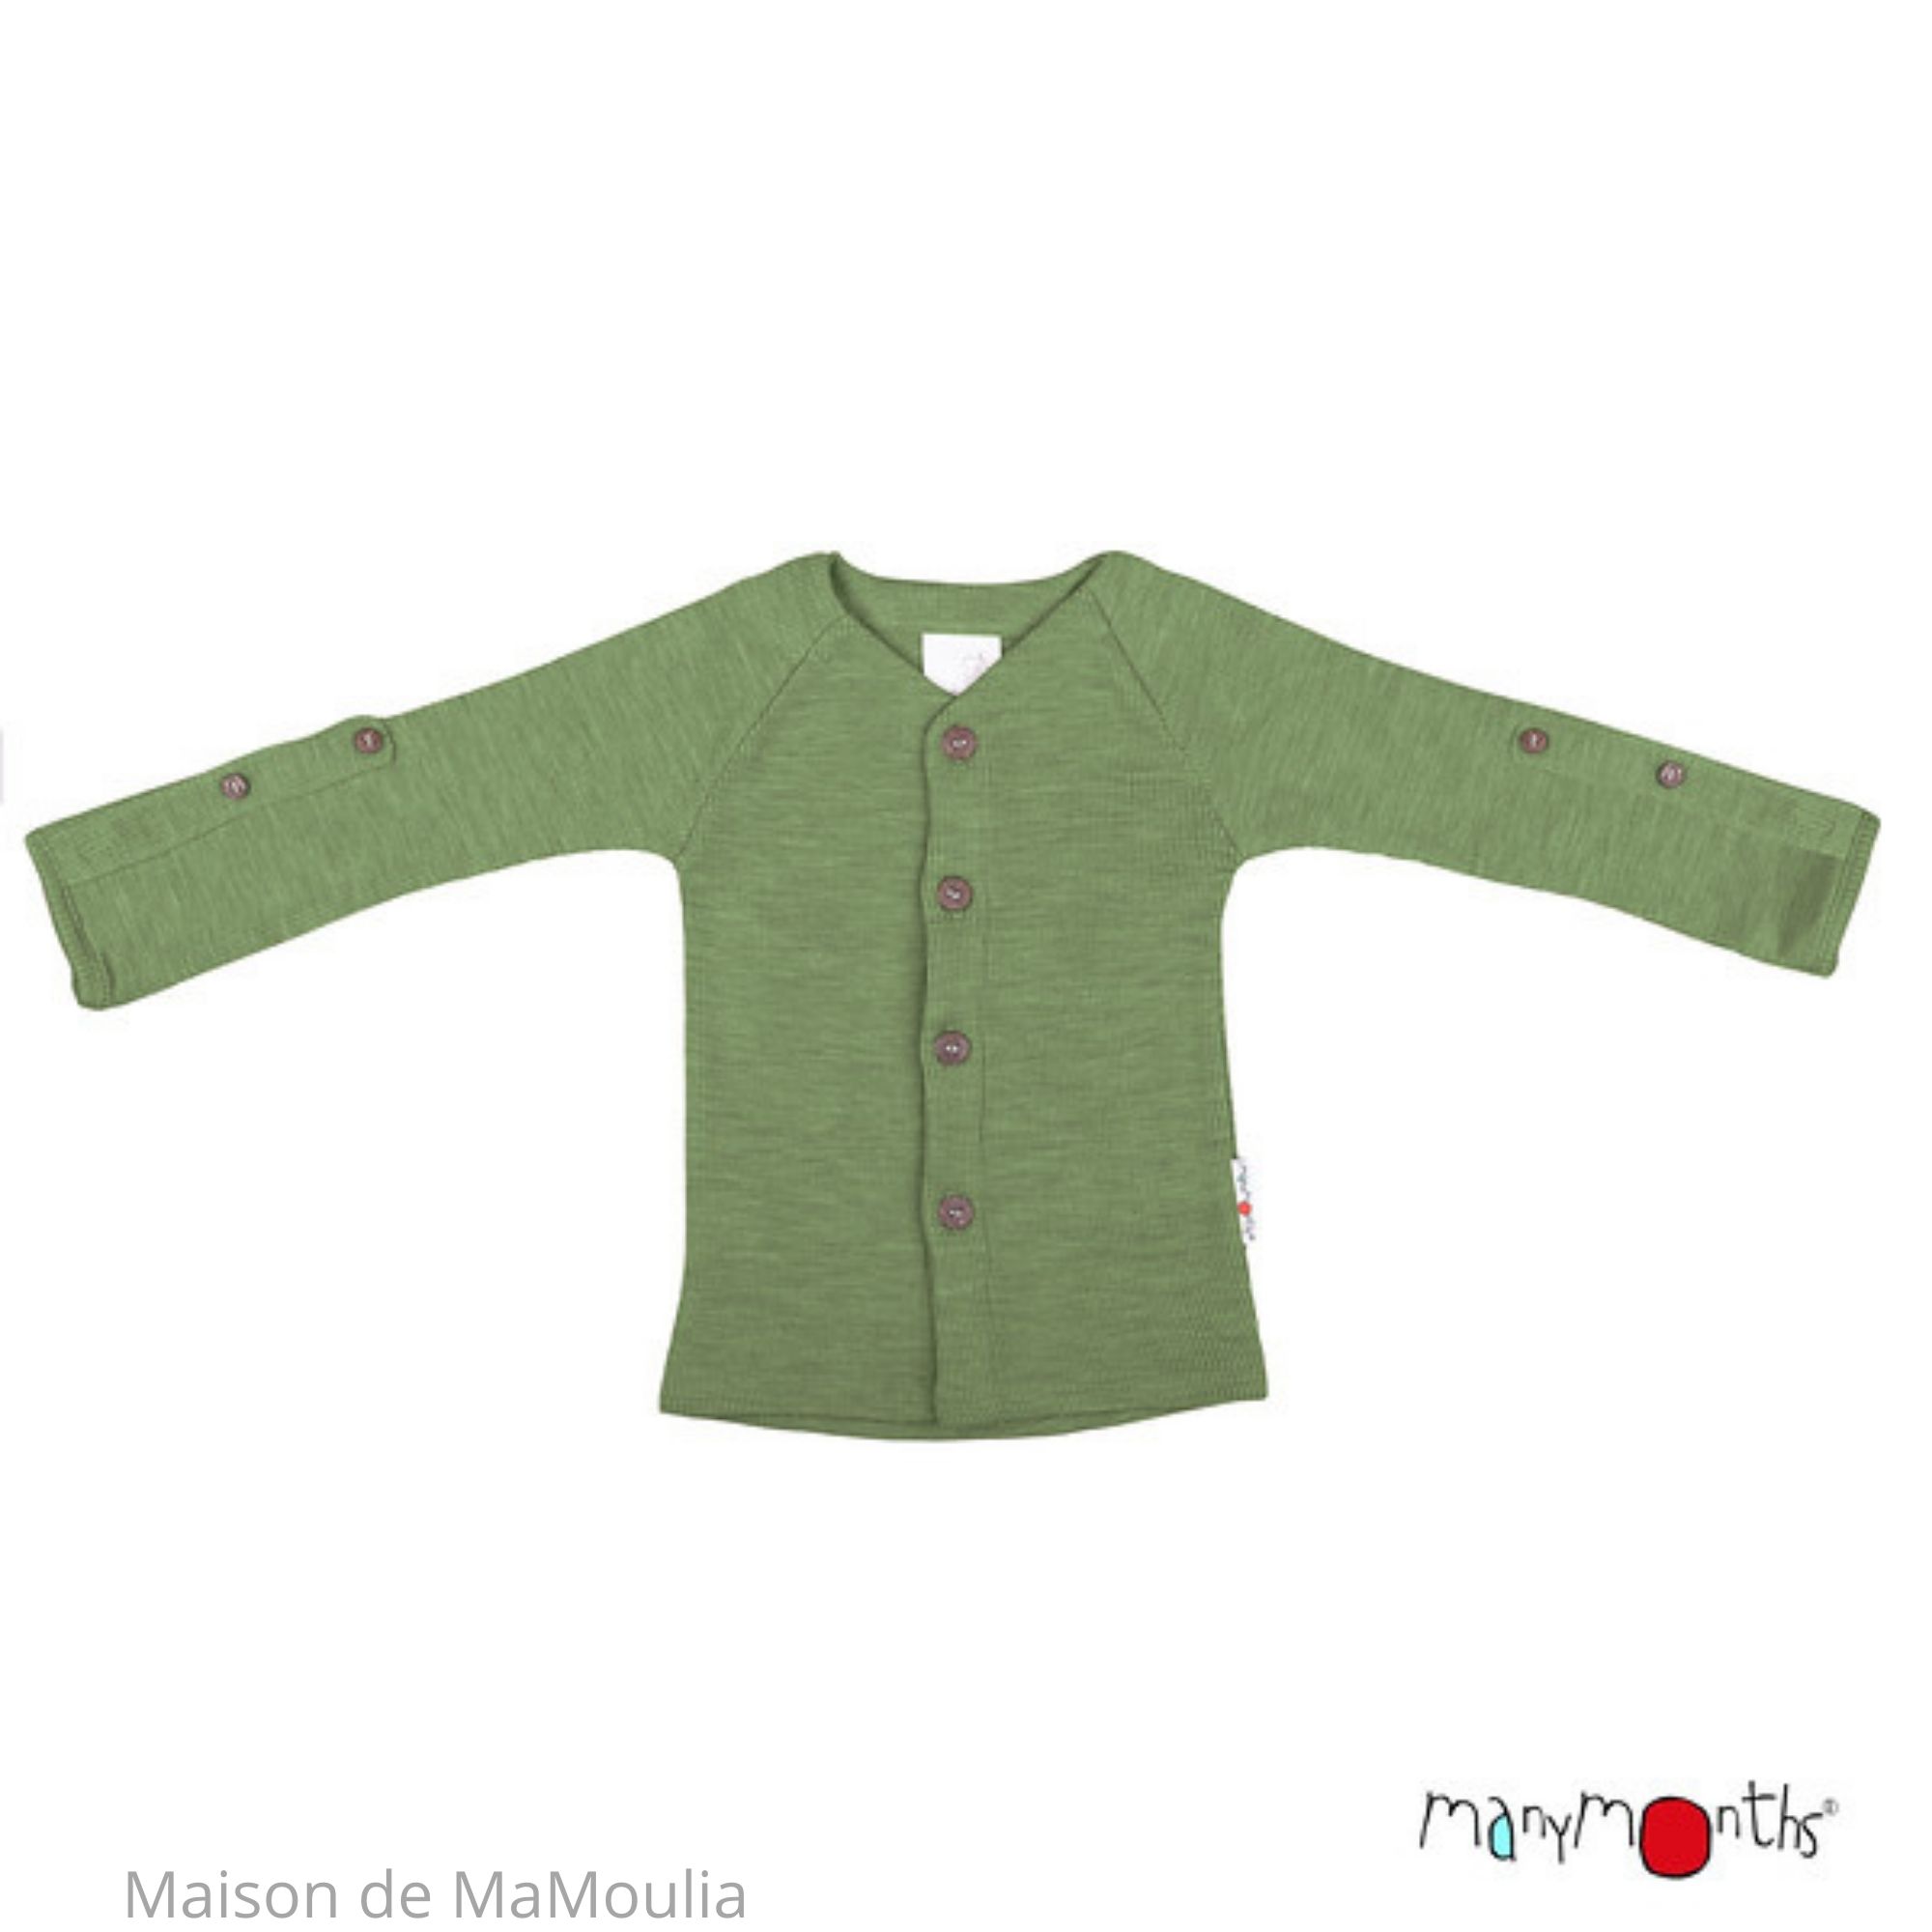 gilet-cardigan-bebe-enfant-evolutif-pure-laine-merinos-manymonths-maison-de-mamoulia-jade-green